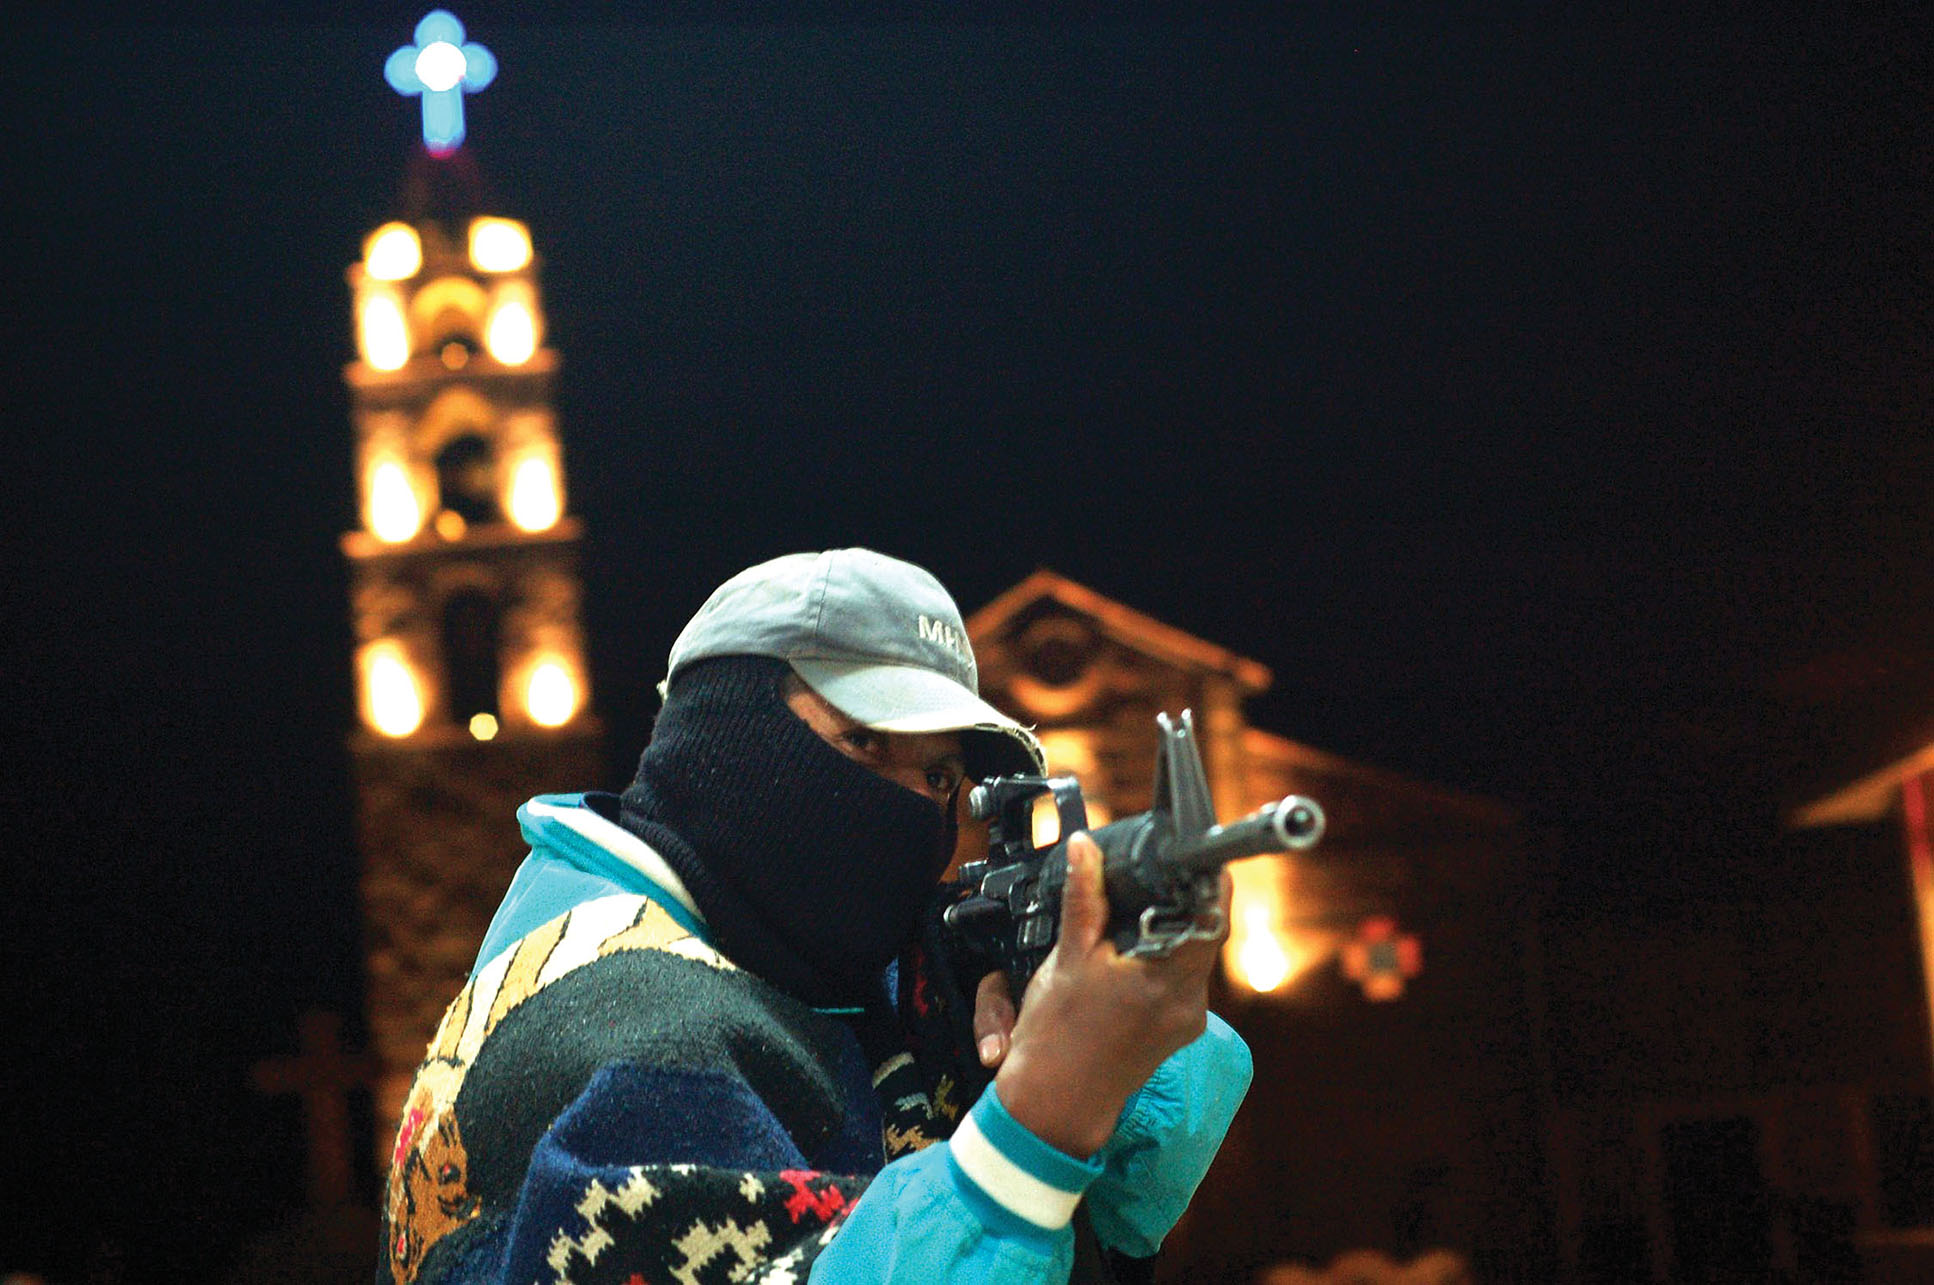 A member of the community guard of Turícuaro, Michoacán shows off by aiming his assault rifle. (Photo by Juan José Estrada Serafín.)